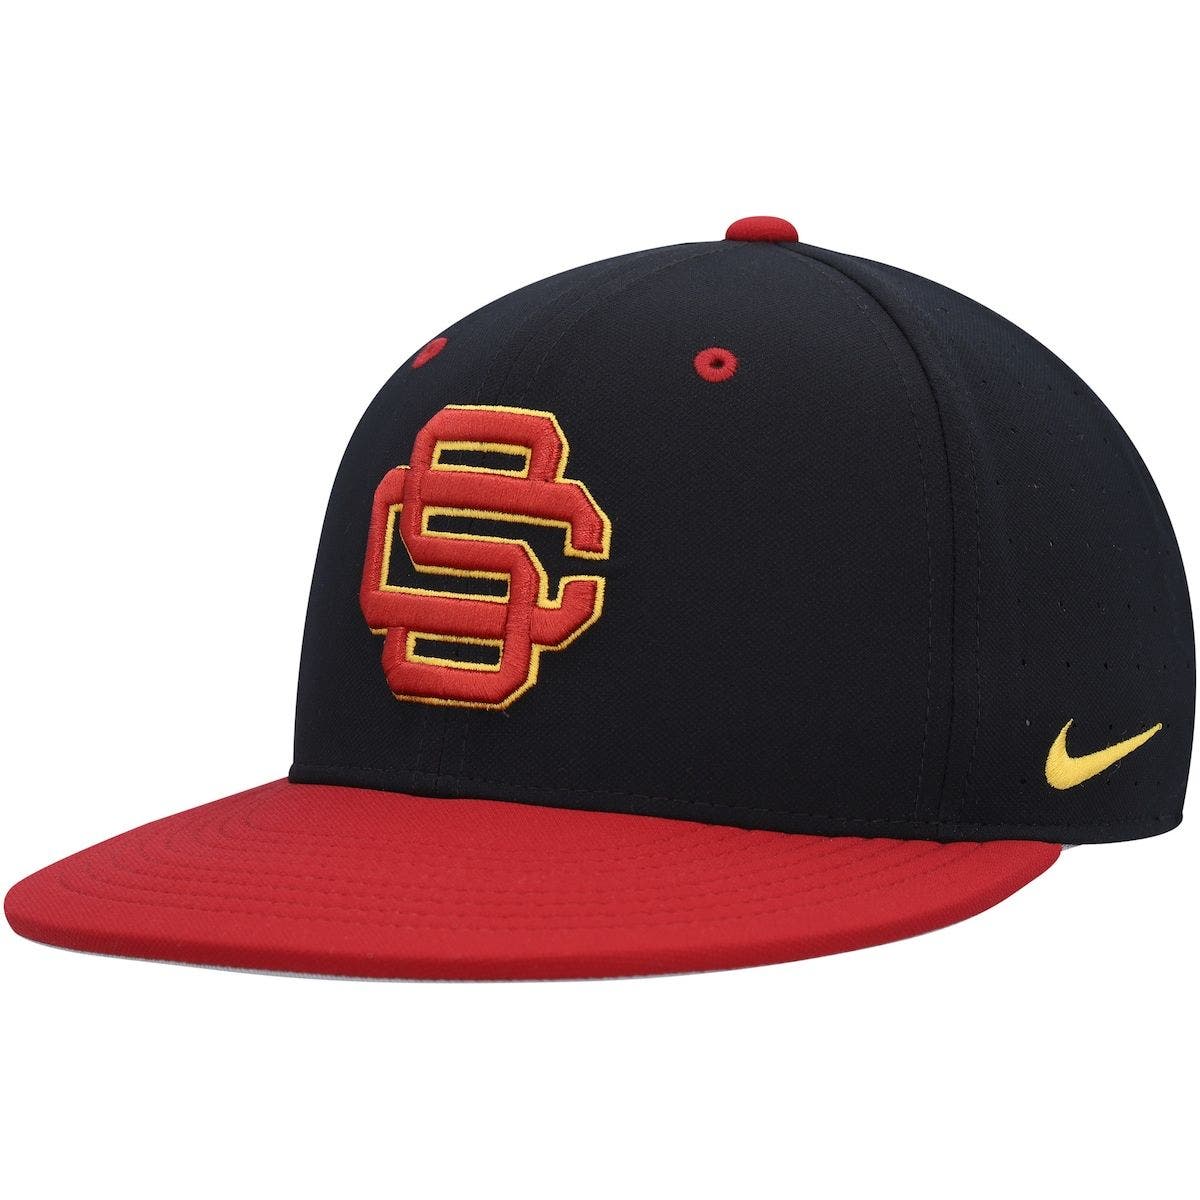 Men's Nike Black USC Trojans Aero True Baseball Performance Fitted Hat